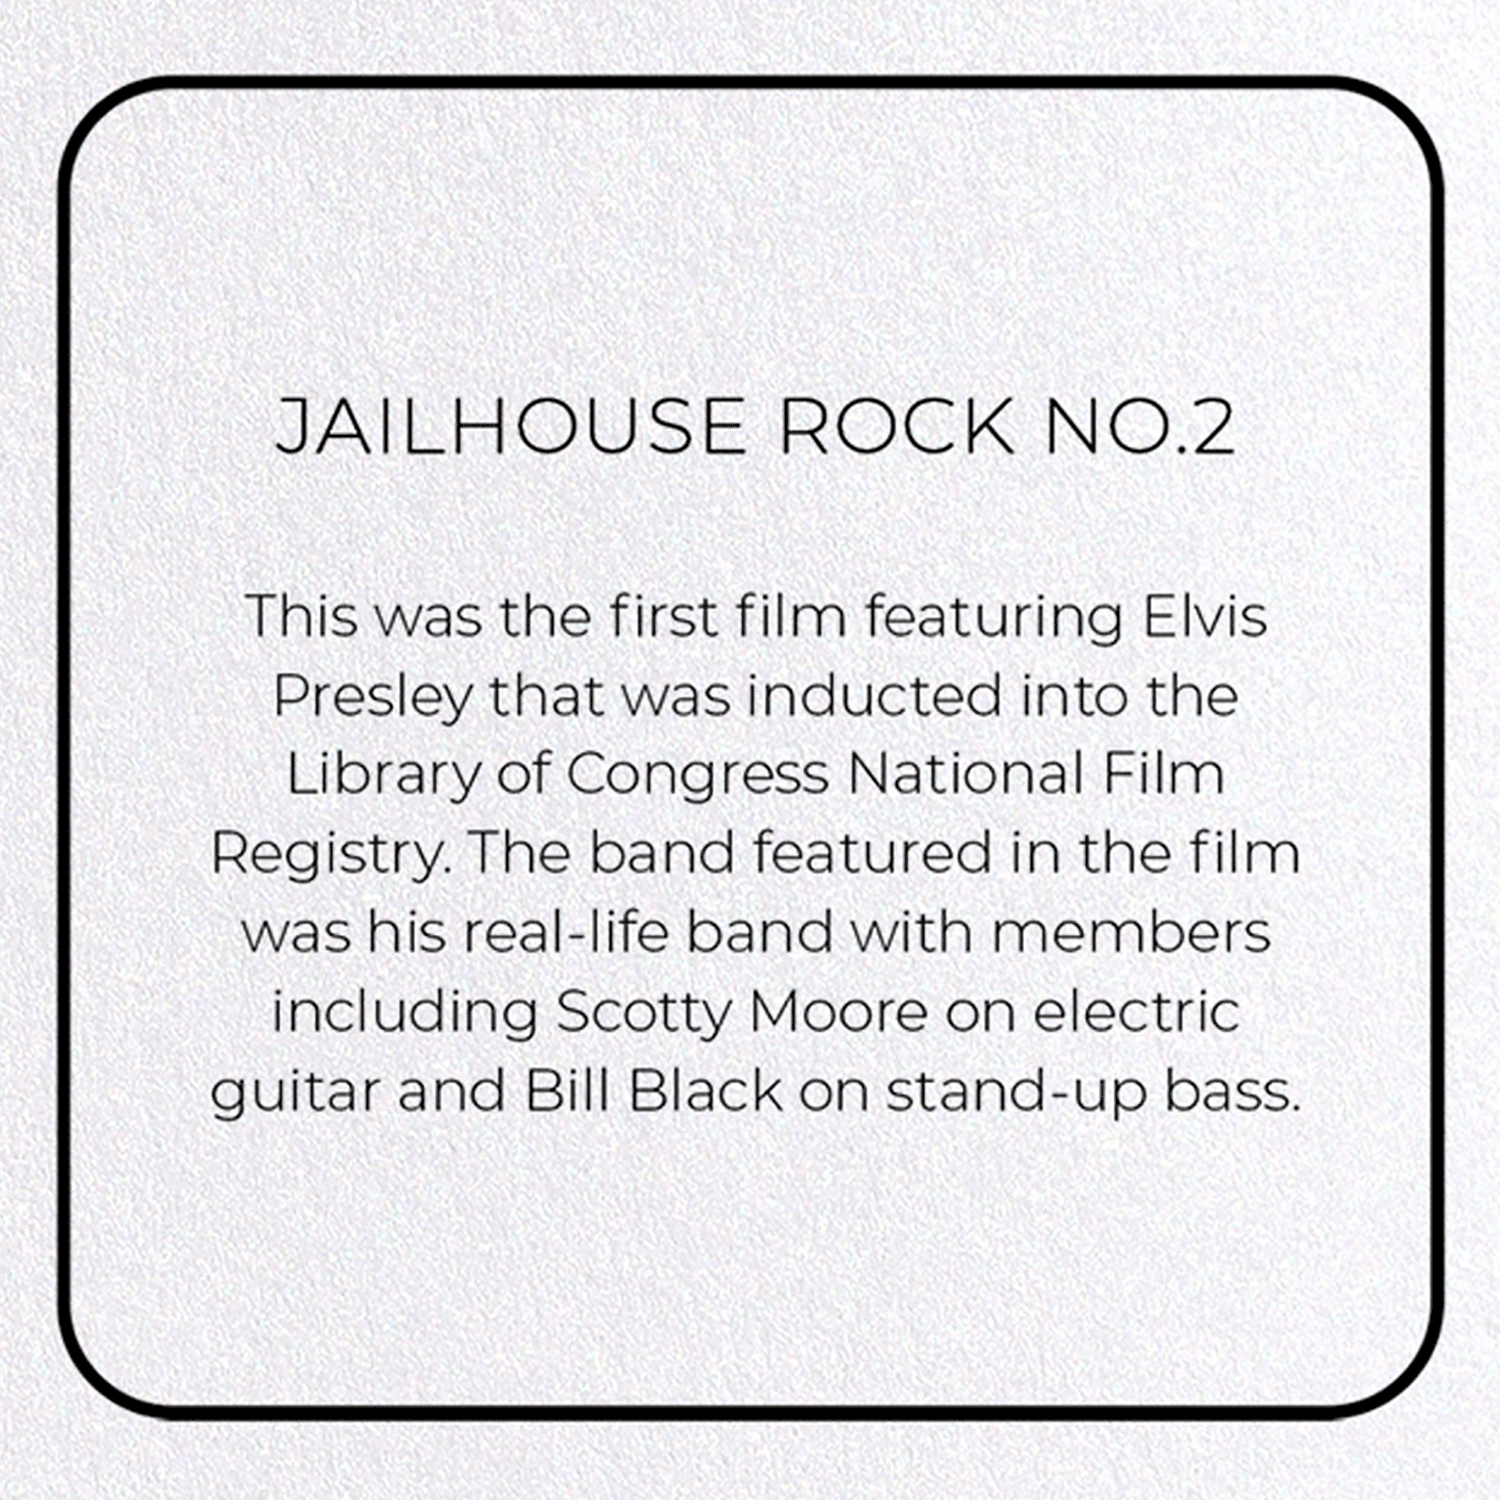 JAILHOUSE ROCK NO.2